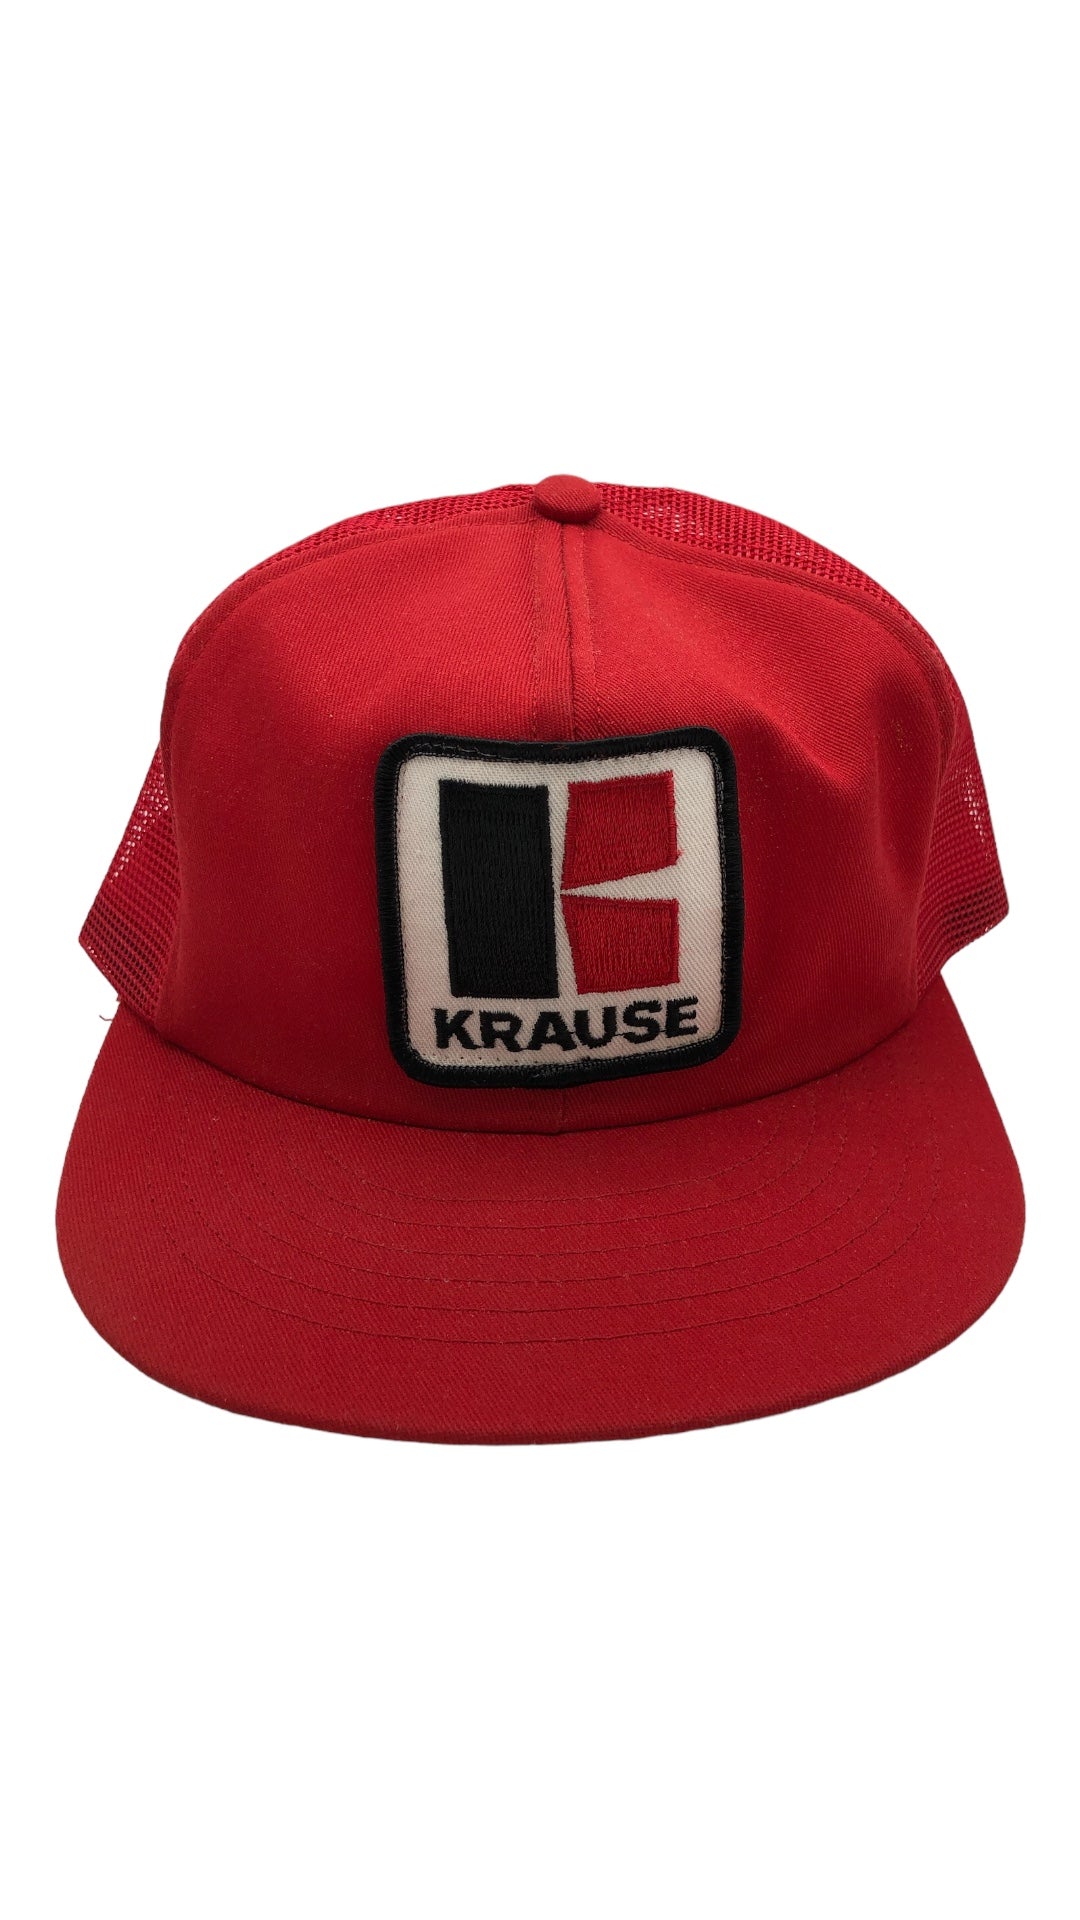 VTG Krause Red Trucker Hat